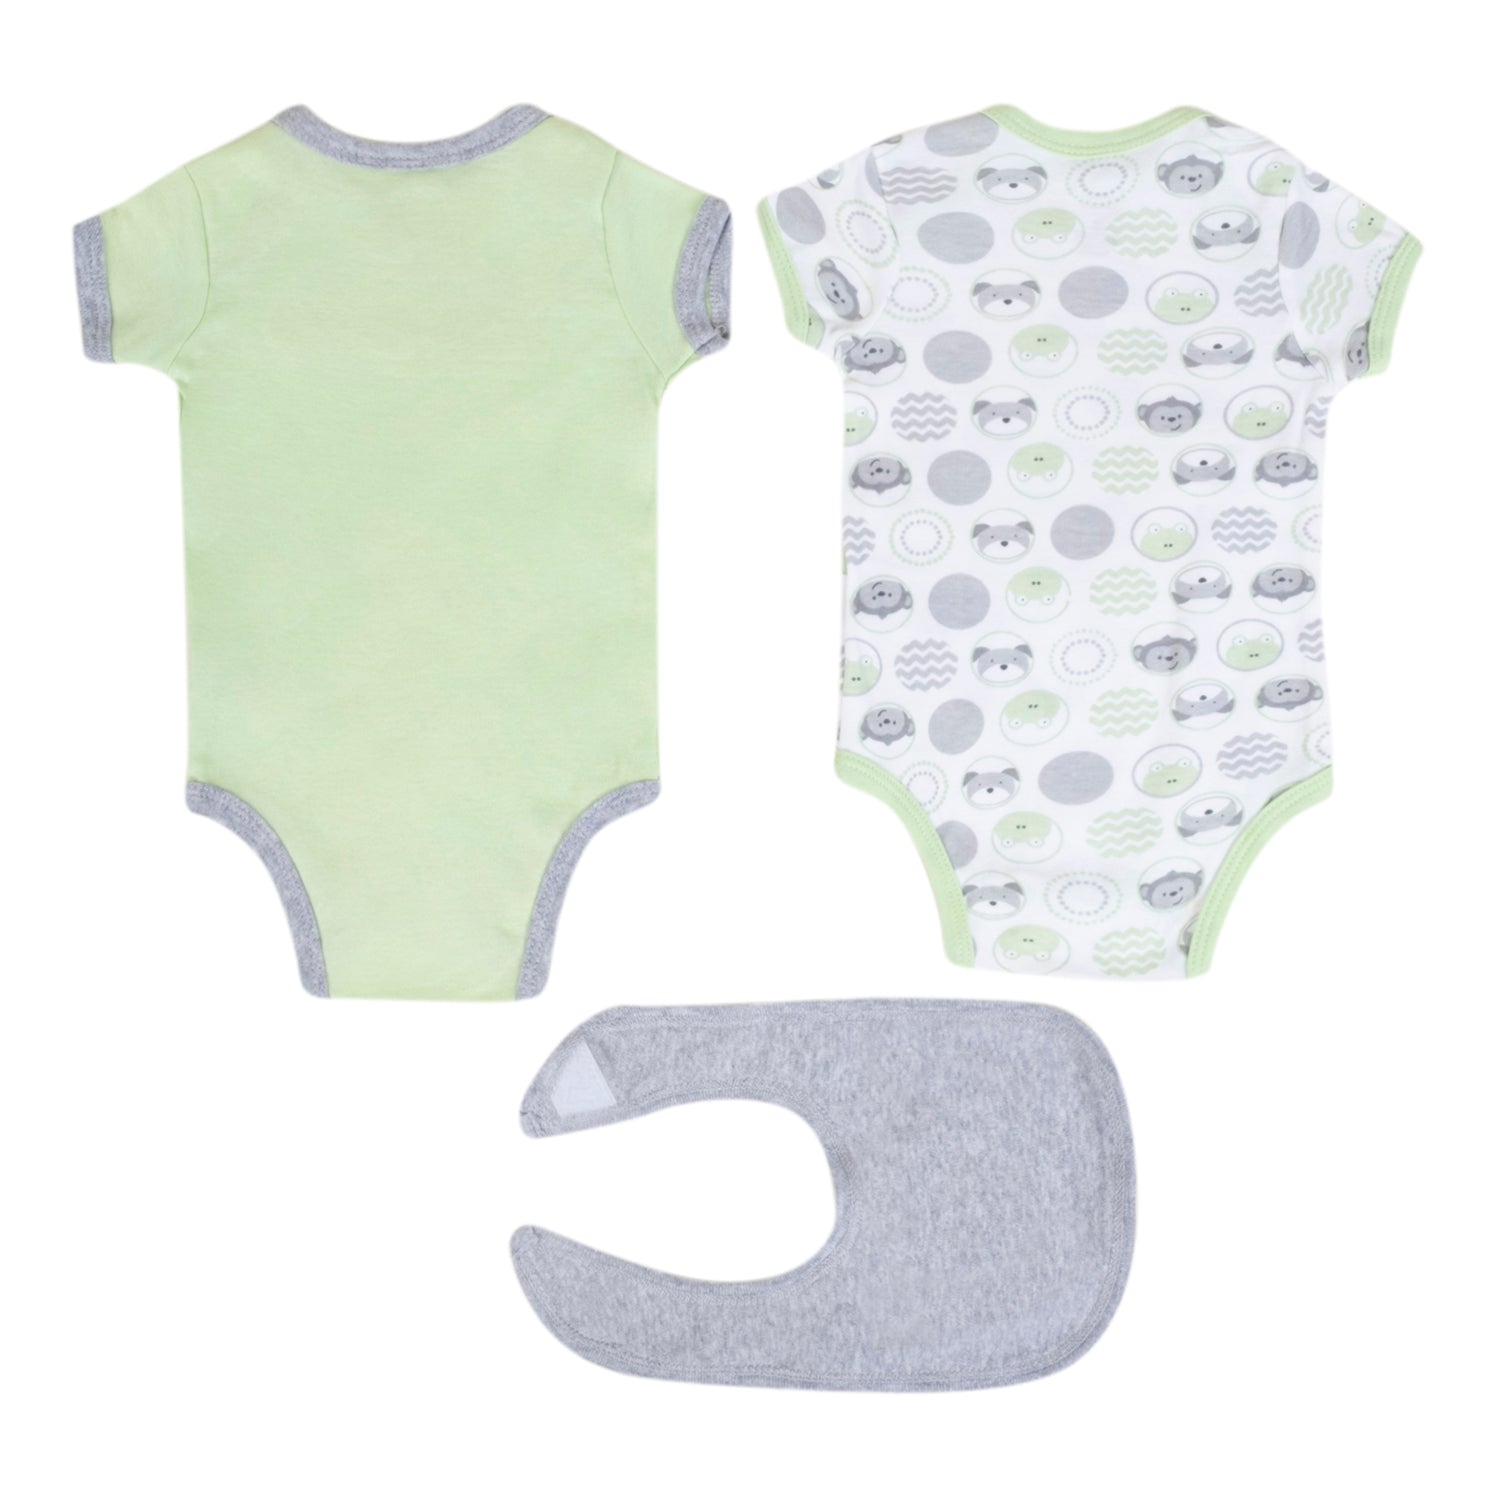 Baby Moo Peek A Boo Gift Set 5 Piece With Bodysuits, Pyjama, Bib And Socks - Green, Grey